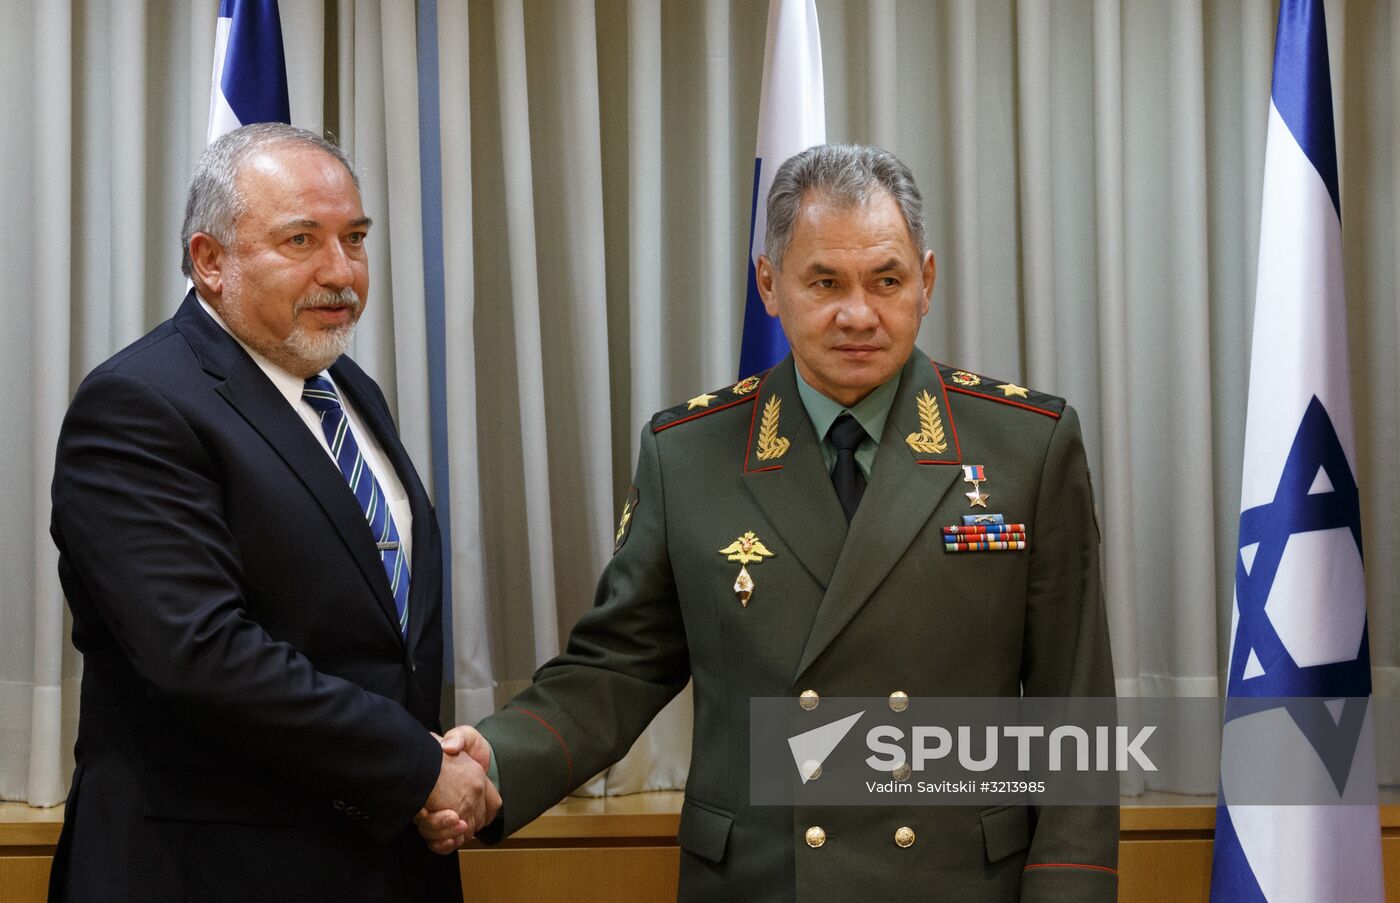 Russian Defense Minister Sergei Shoigu meets with Israeli Defense Minister Avigdor Lieberman